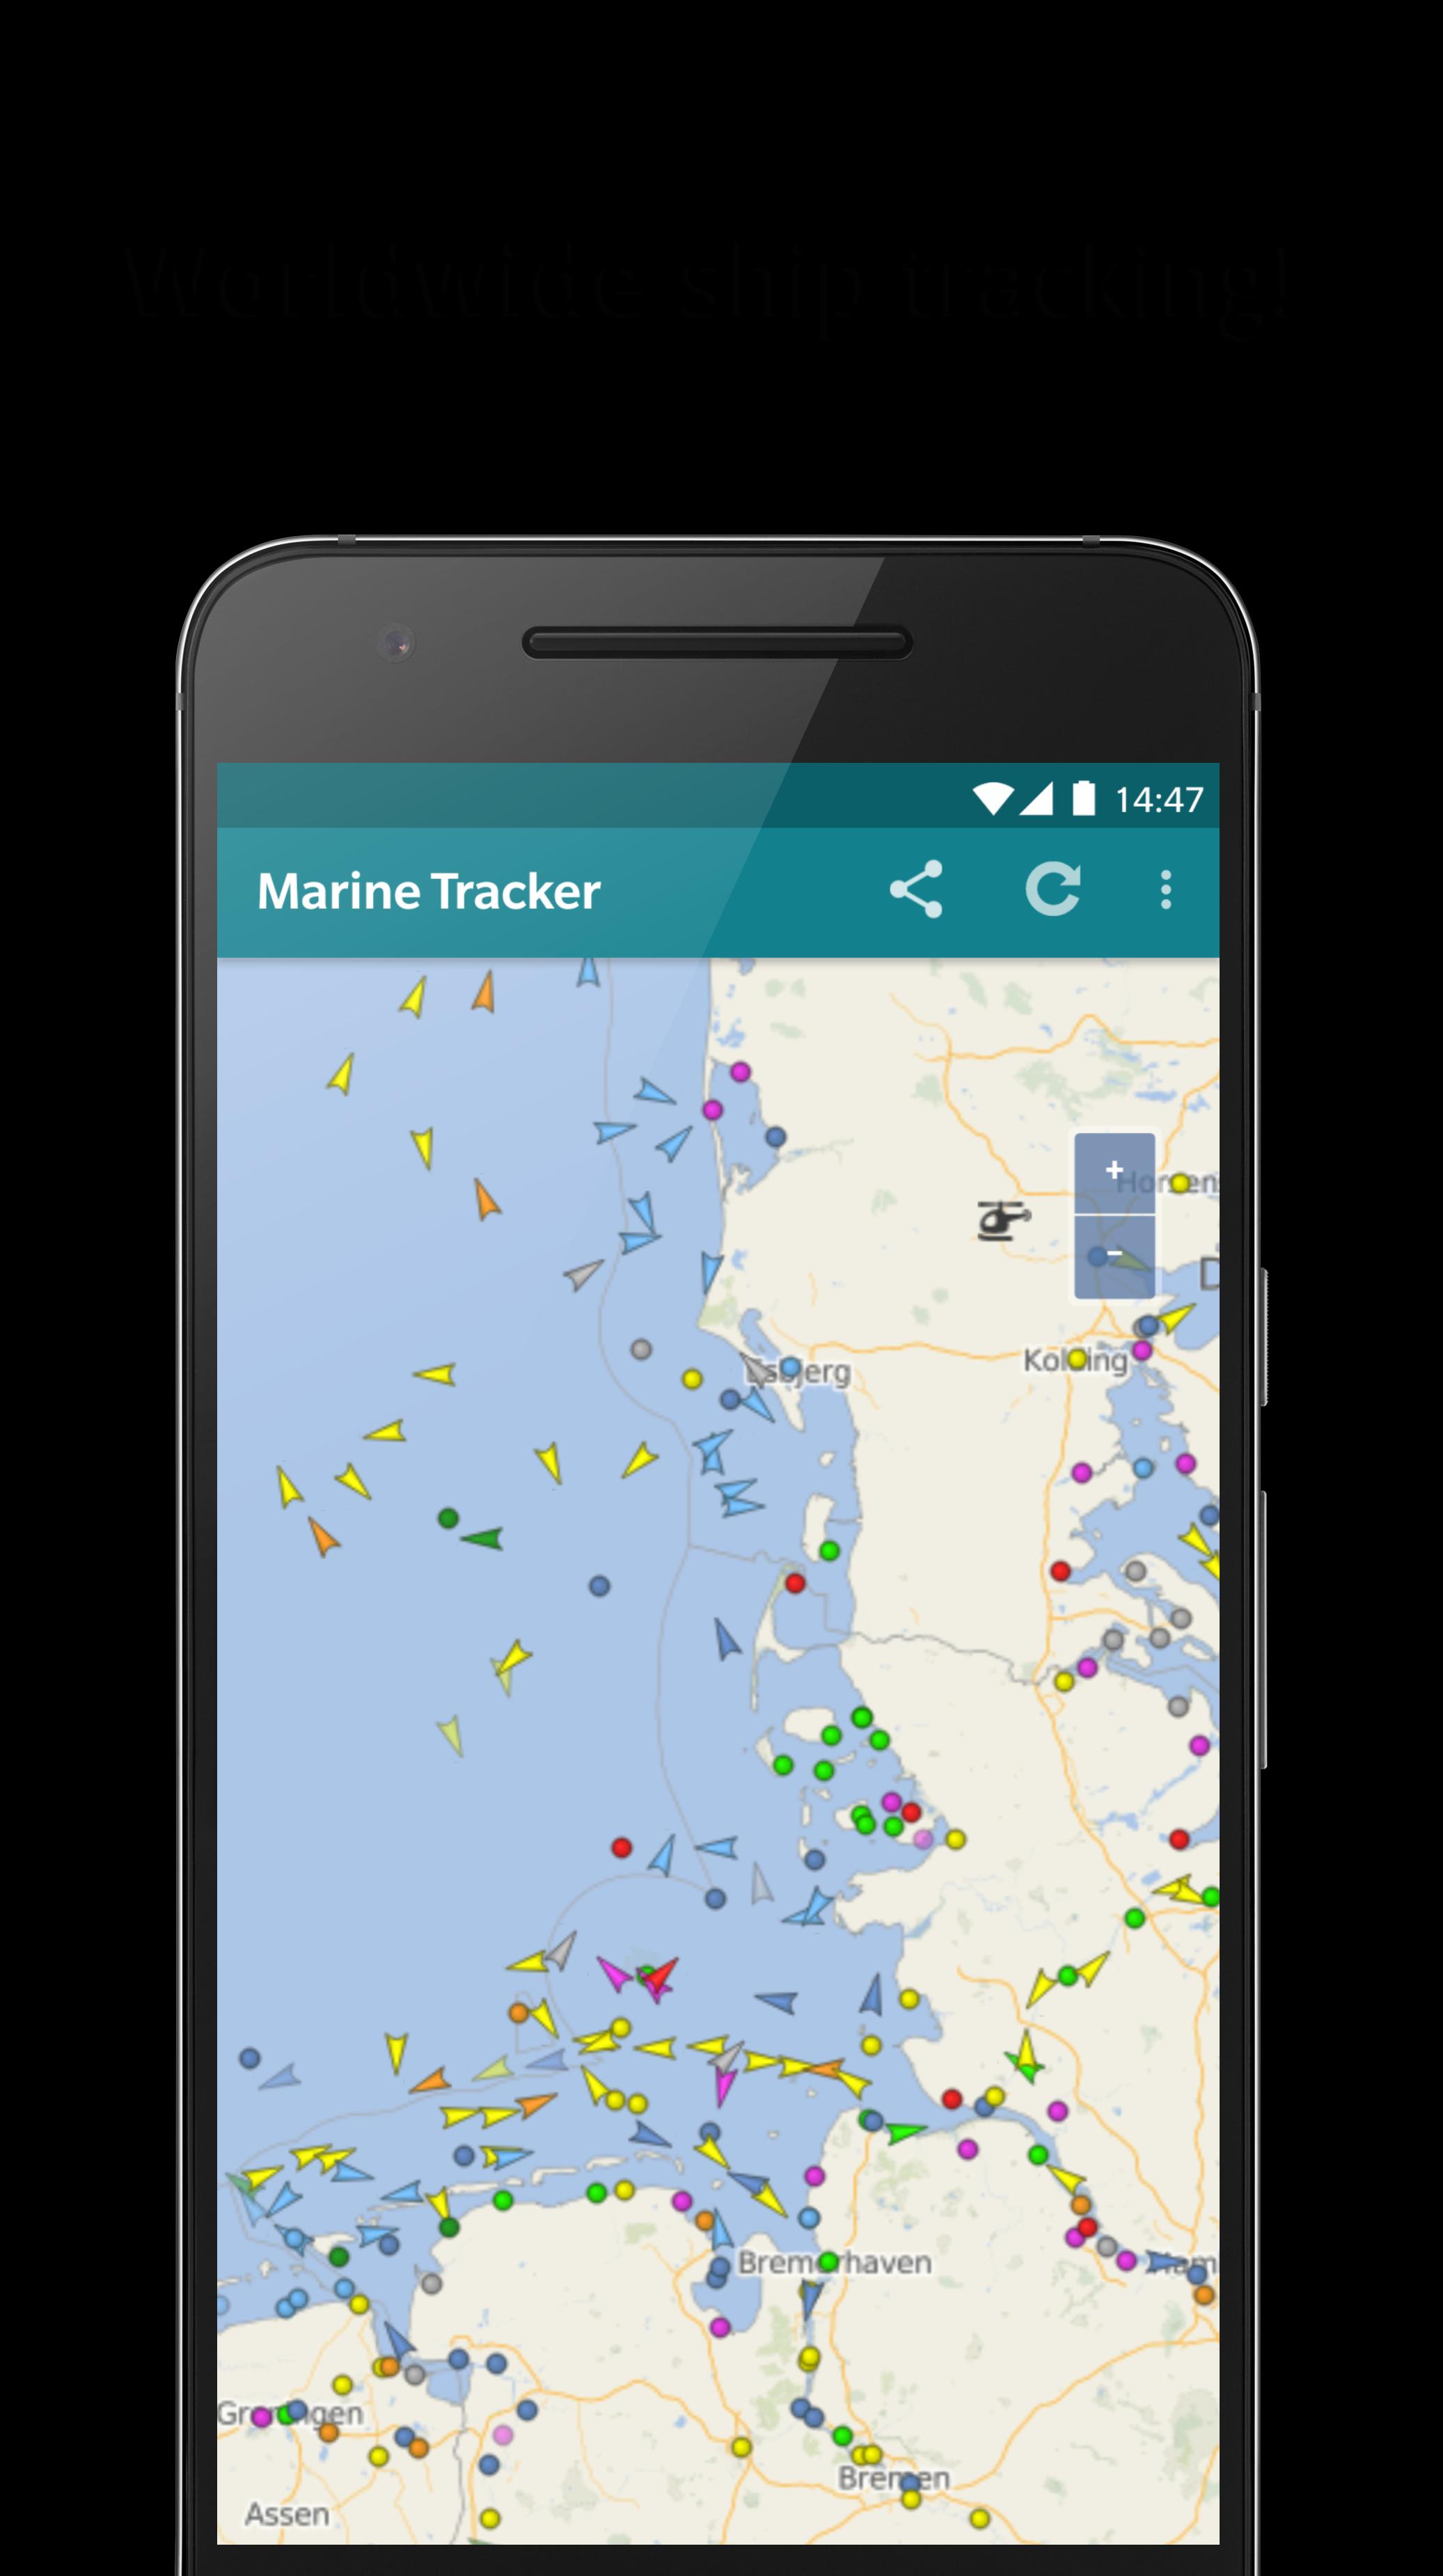 Marine Radar APK for Android Download